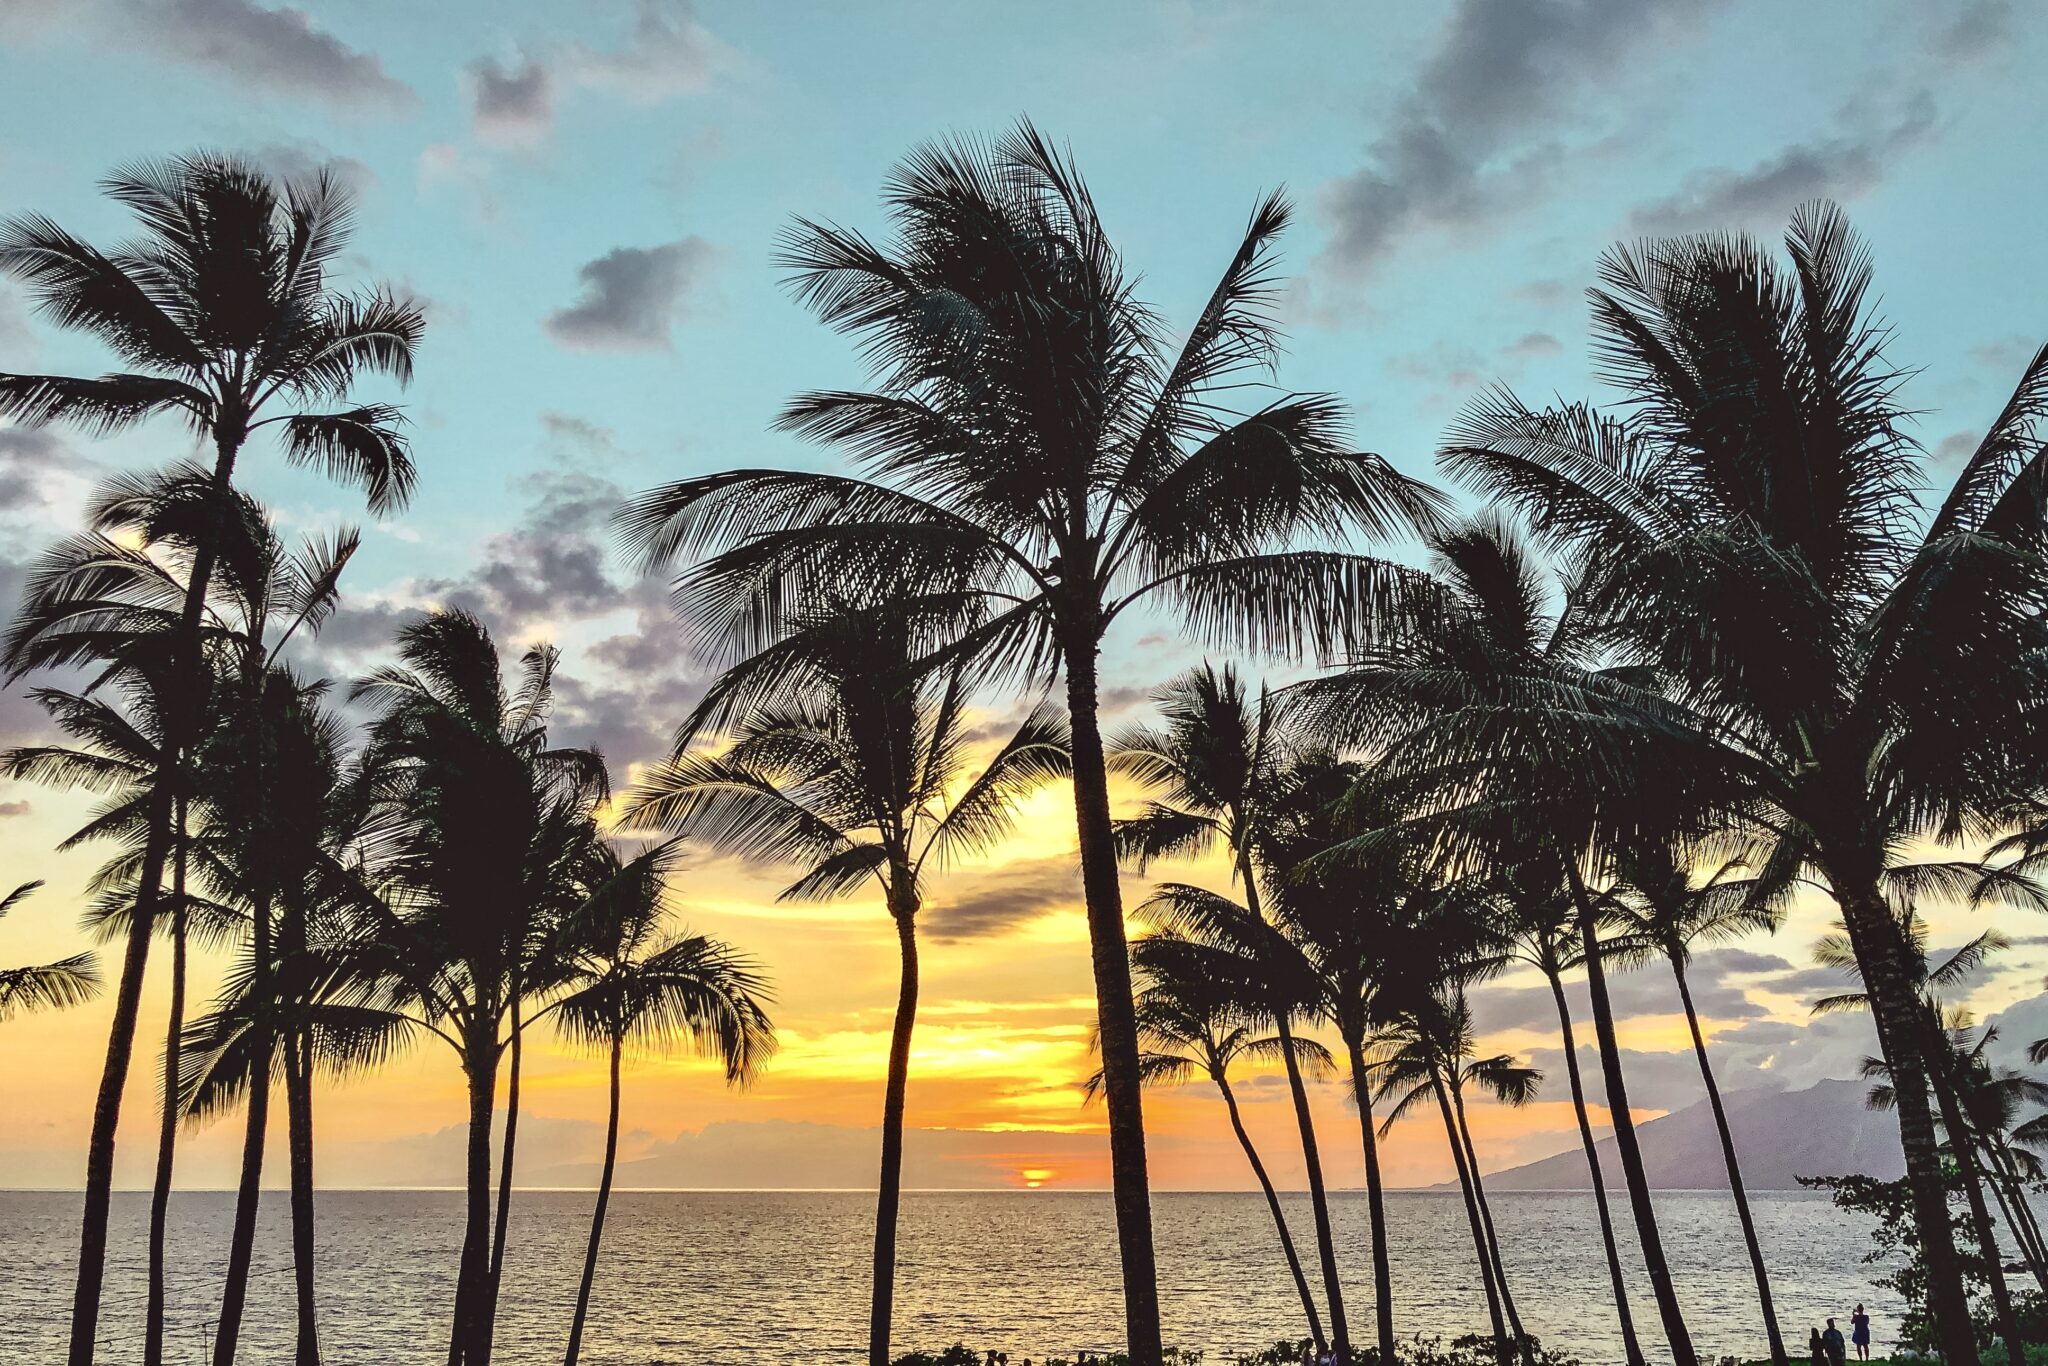 A beach in Maui, Hawaii. Photo credit: Neora Aylon/Unsplash